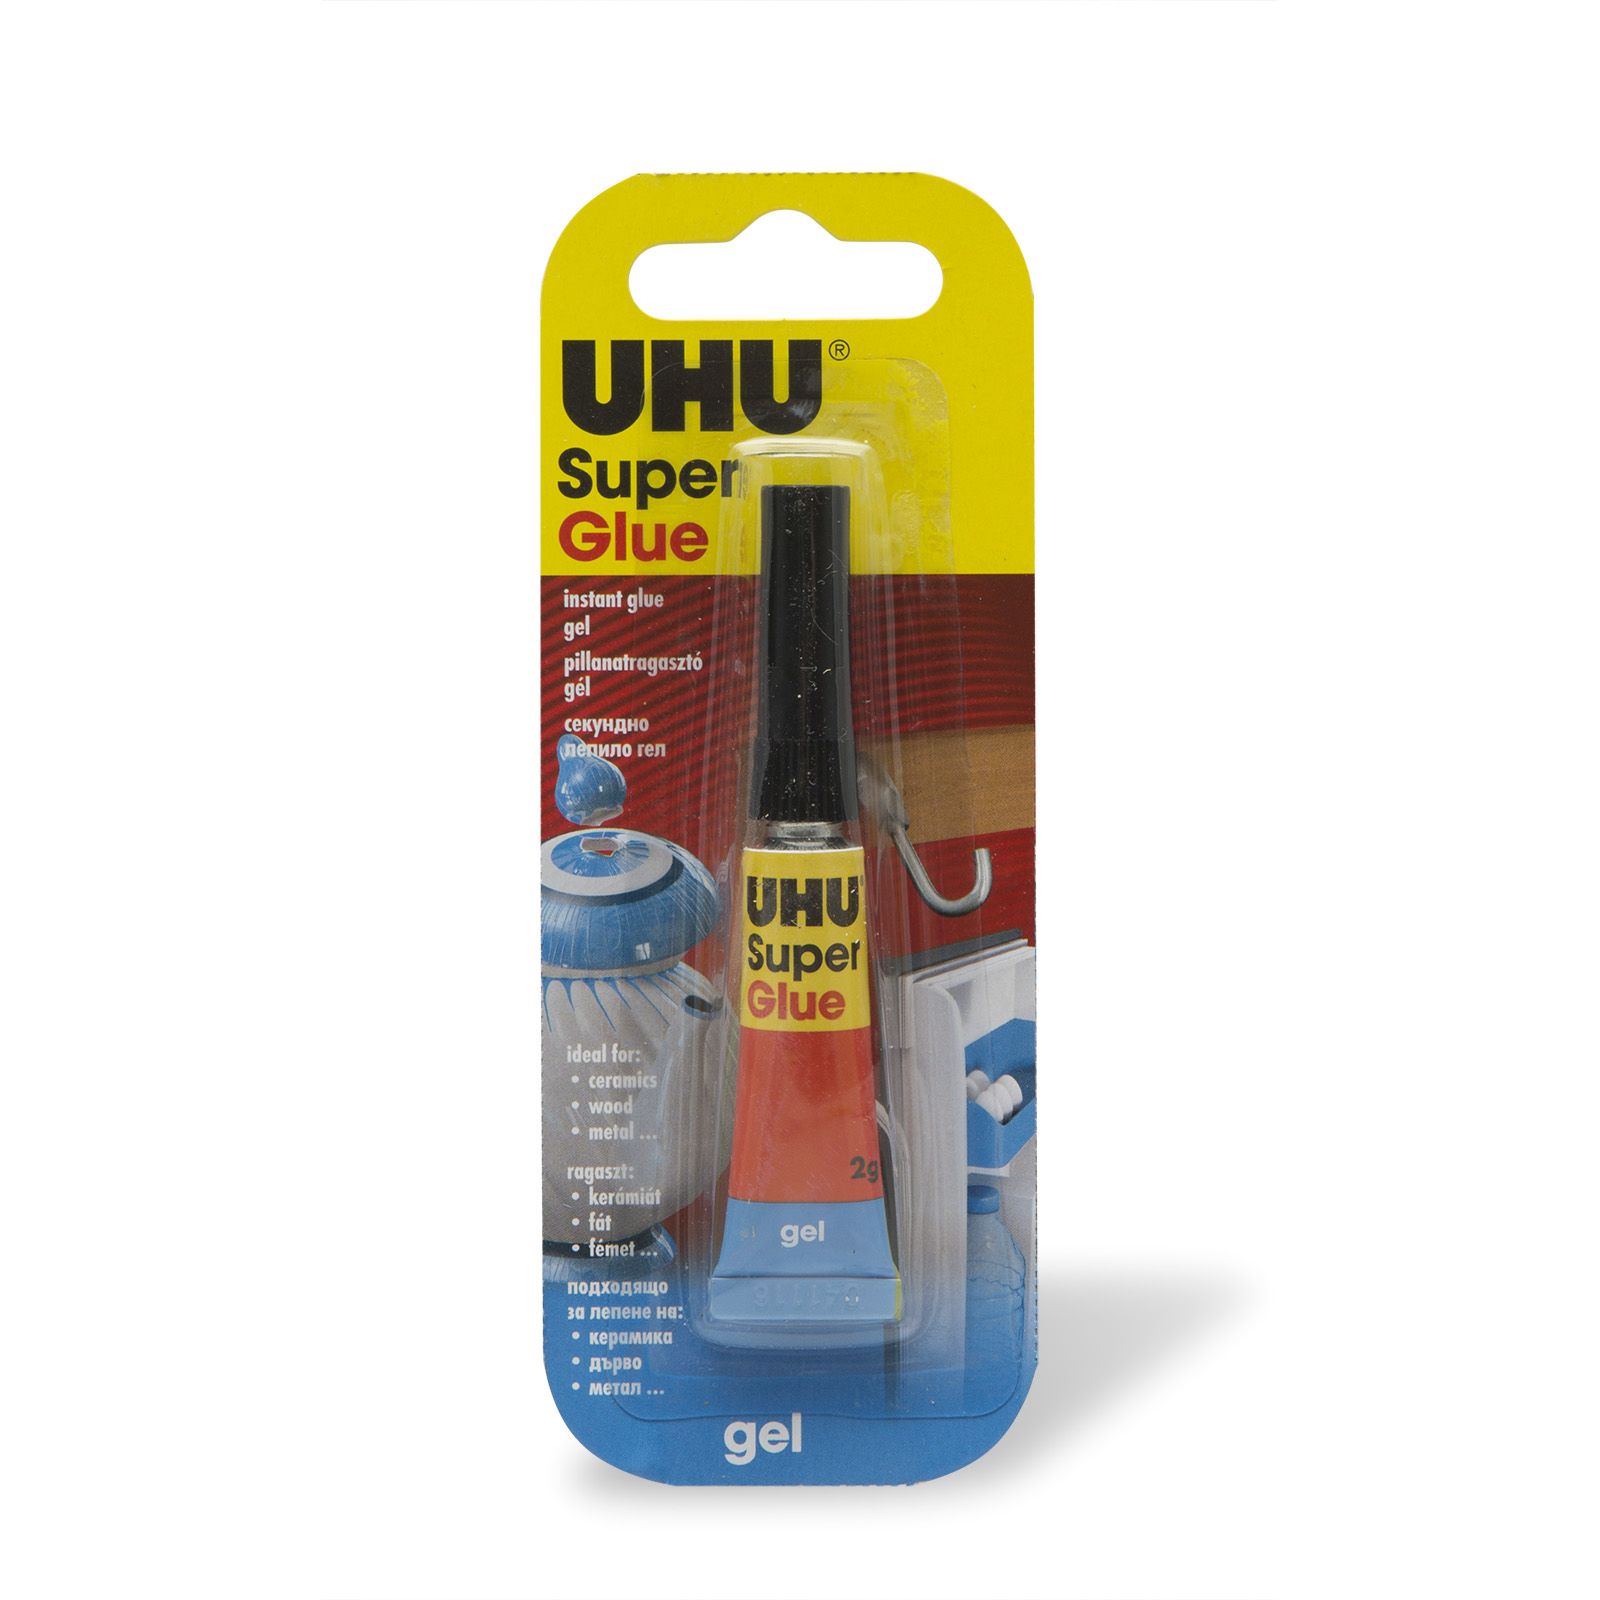 UHU Super Glue pillanatragasztó 2g gel - U36690